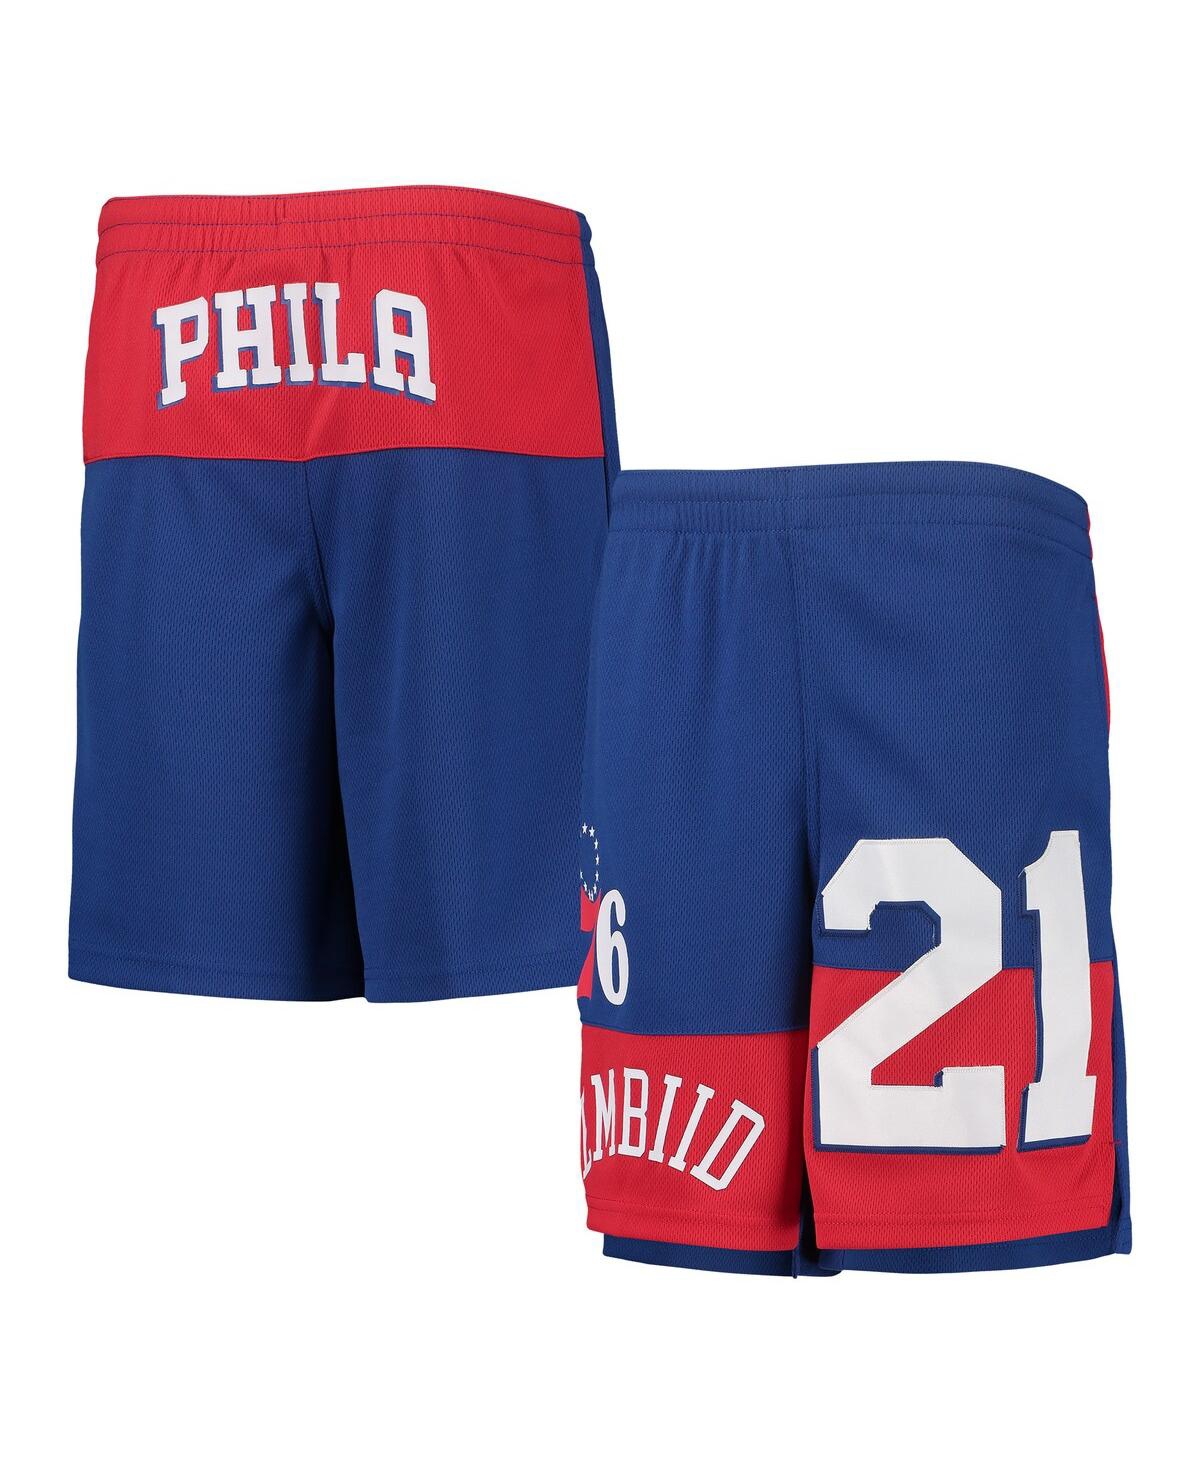 Outerstuff Kids' Big Boys And Girls Joel Embiid Royal Philadelphia 76ers Pandemonium Name And Number Shorts